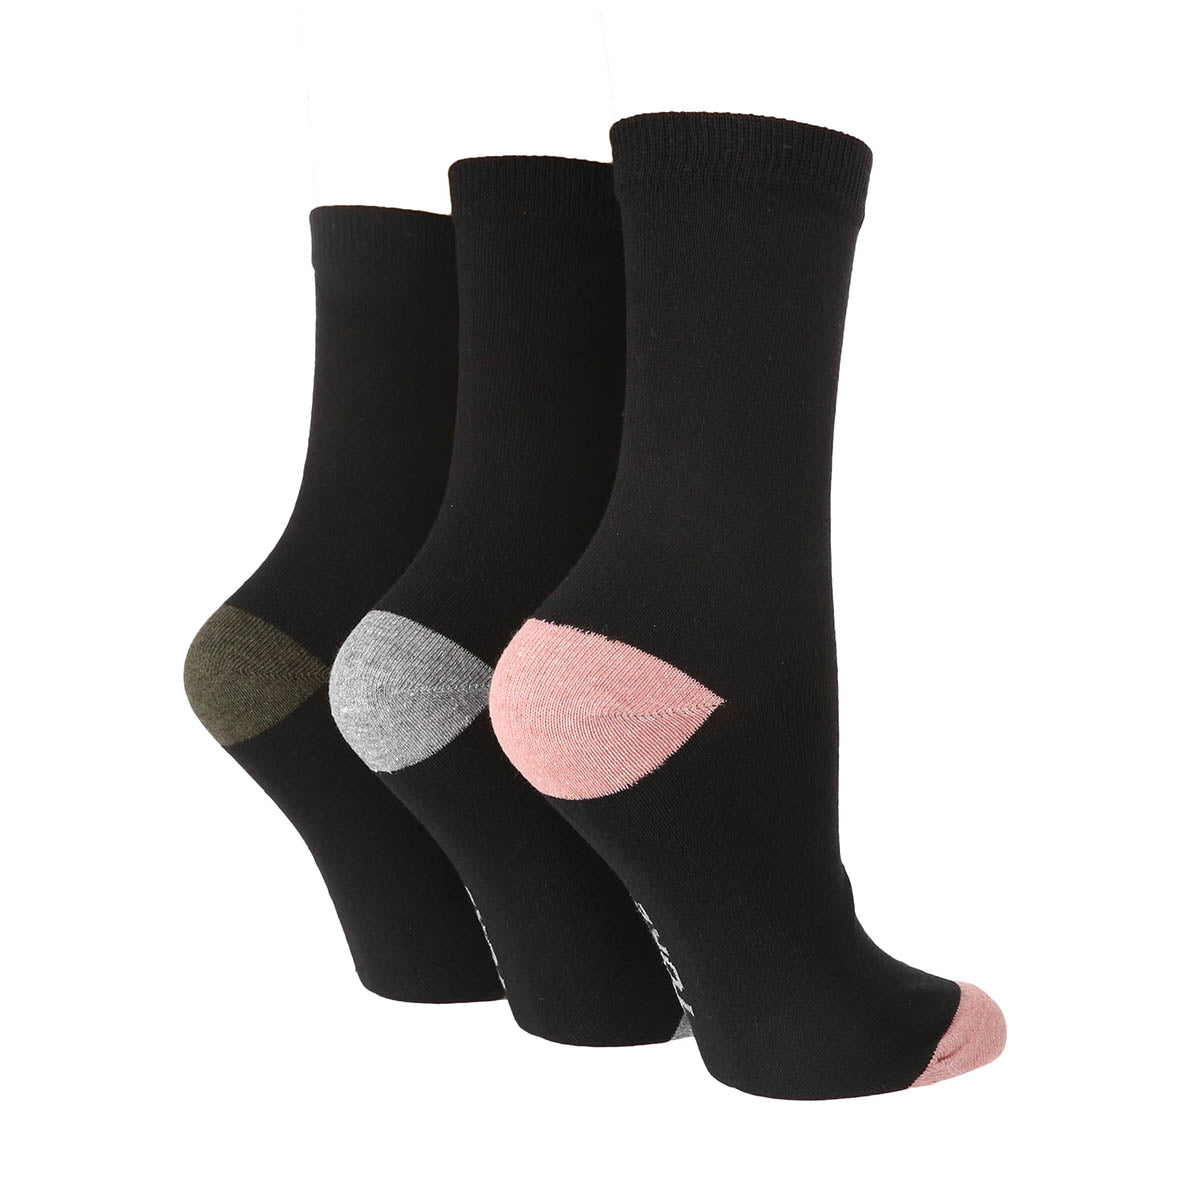 Women's Plain Socks with Contrast Heel & Toe - 3 Pairs